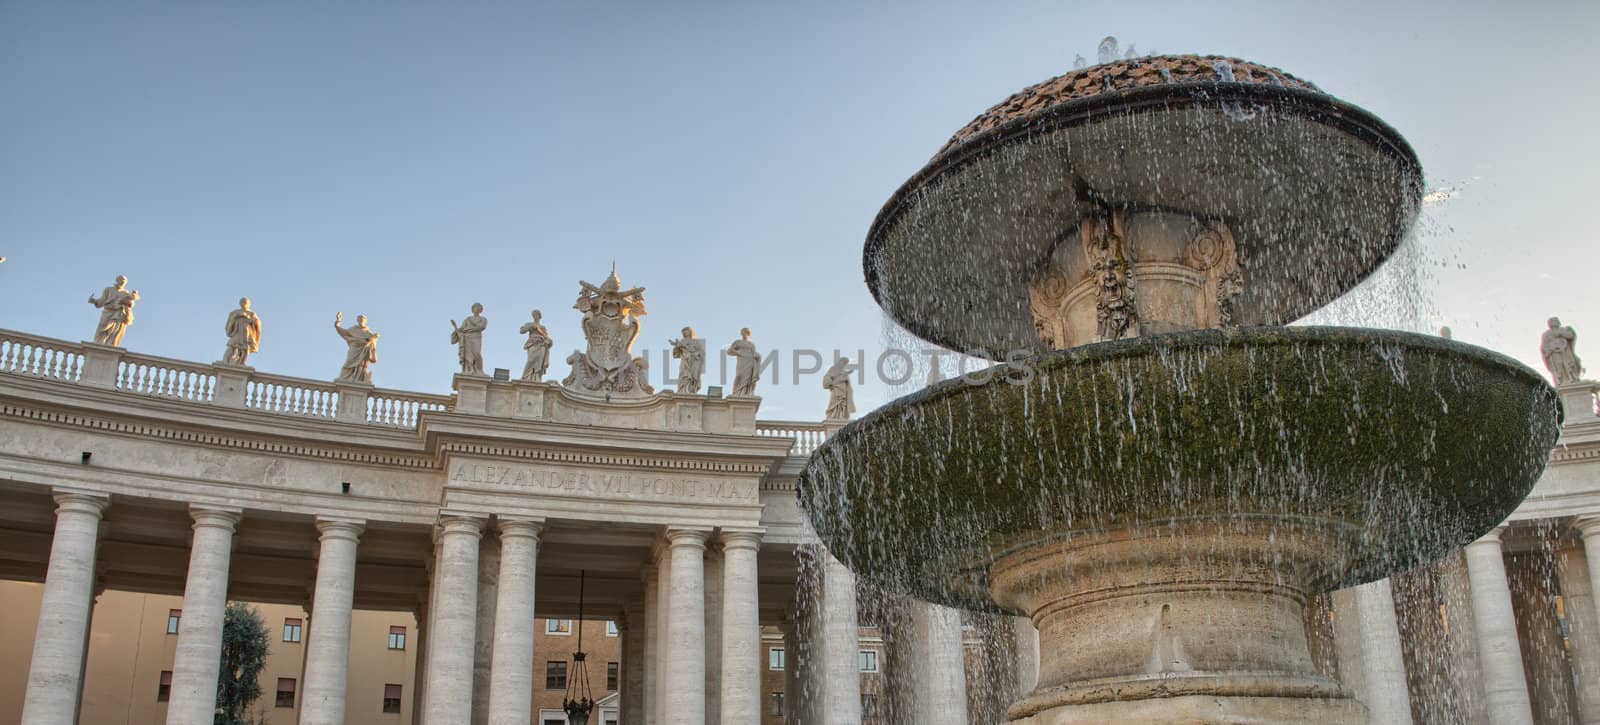 Fountain in Piazza San Pietro - St Peter Square - Rome.